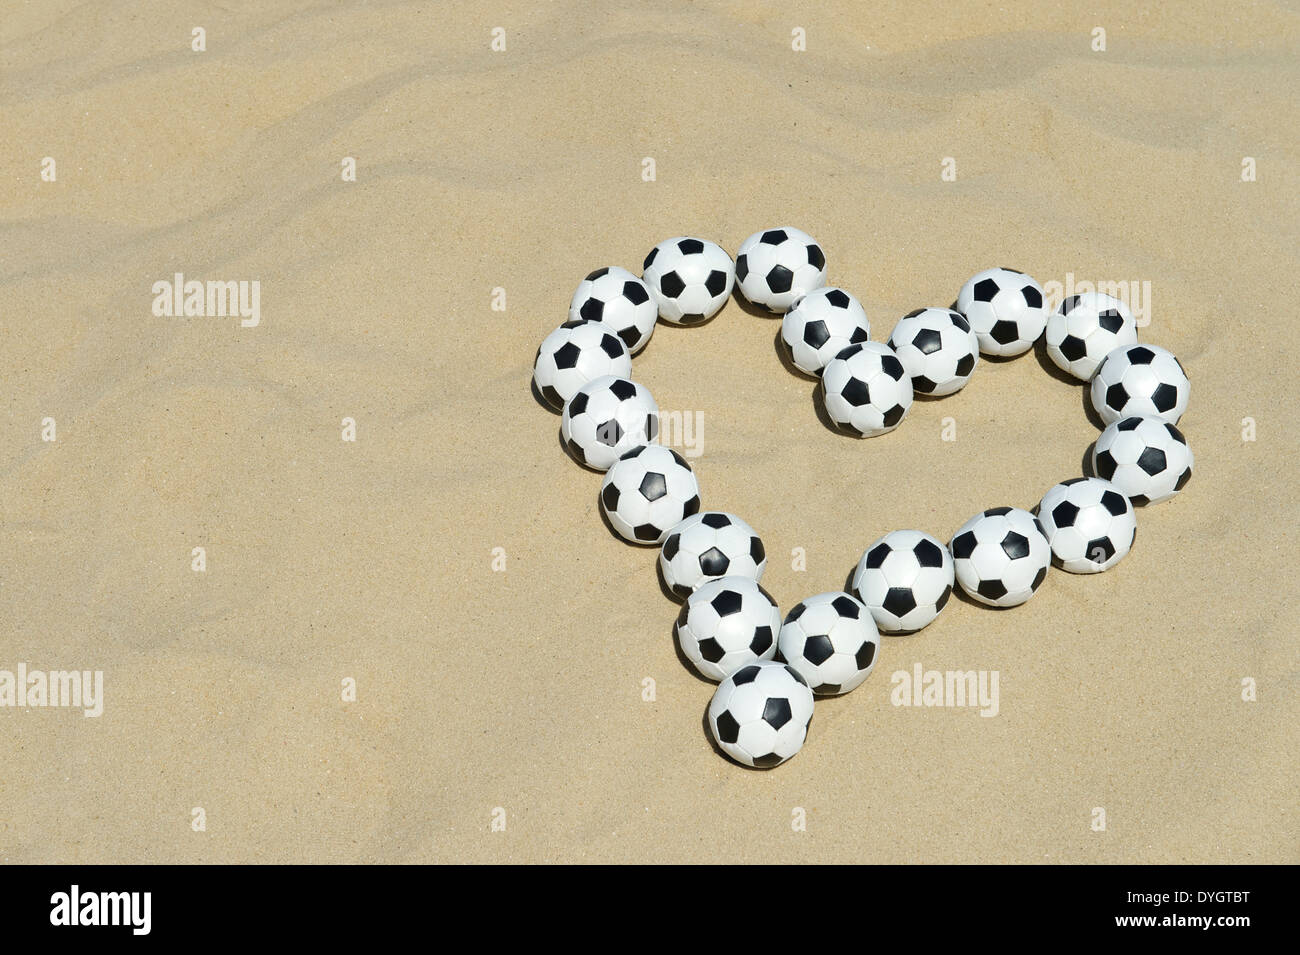 Football love heart made with soccer balls message on bright sand beach in Rio de Janeiro Brazil Stock Photo